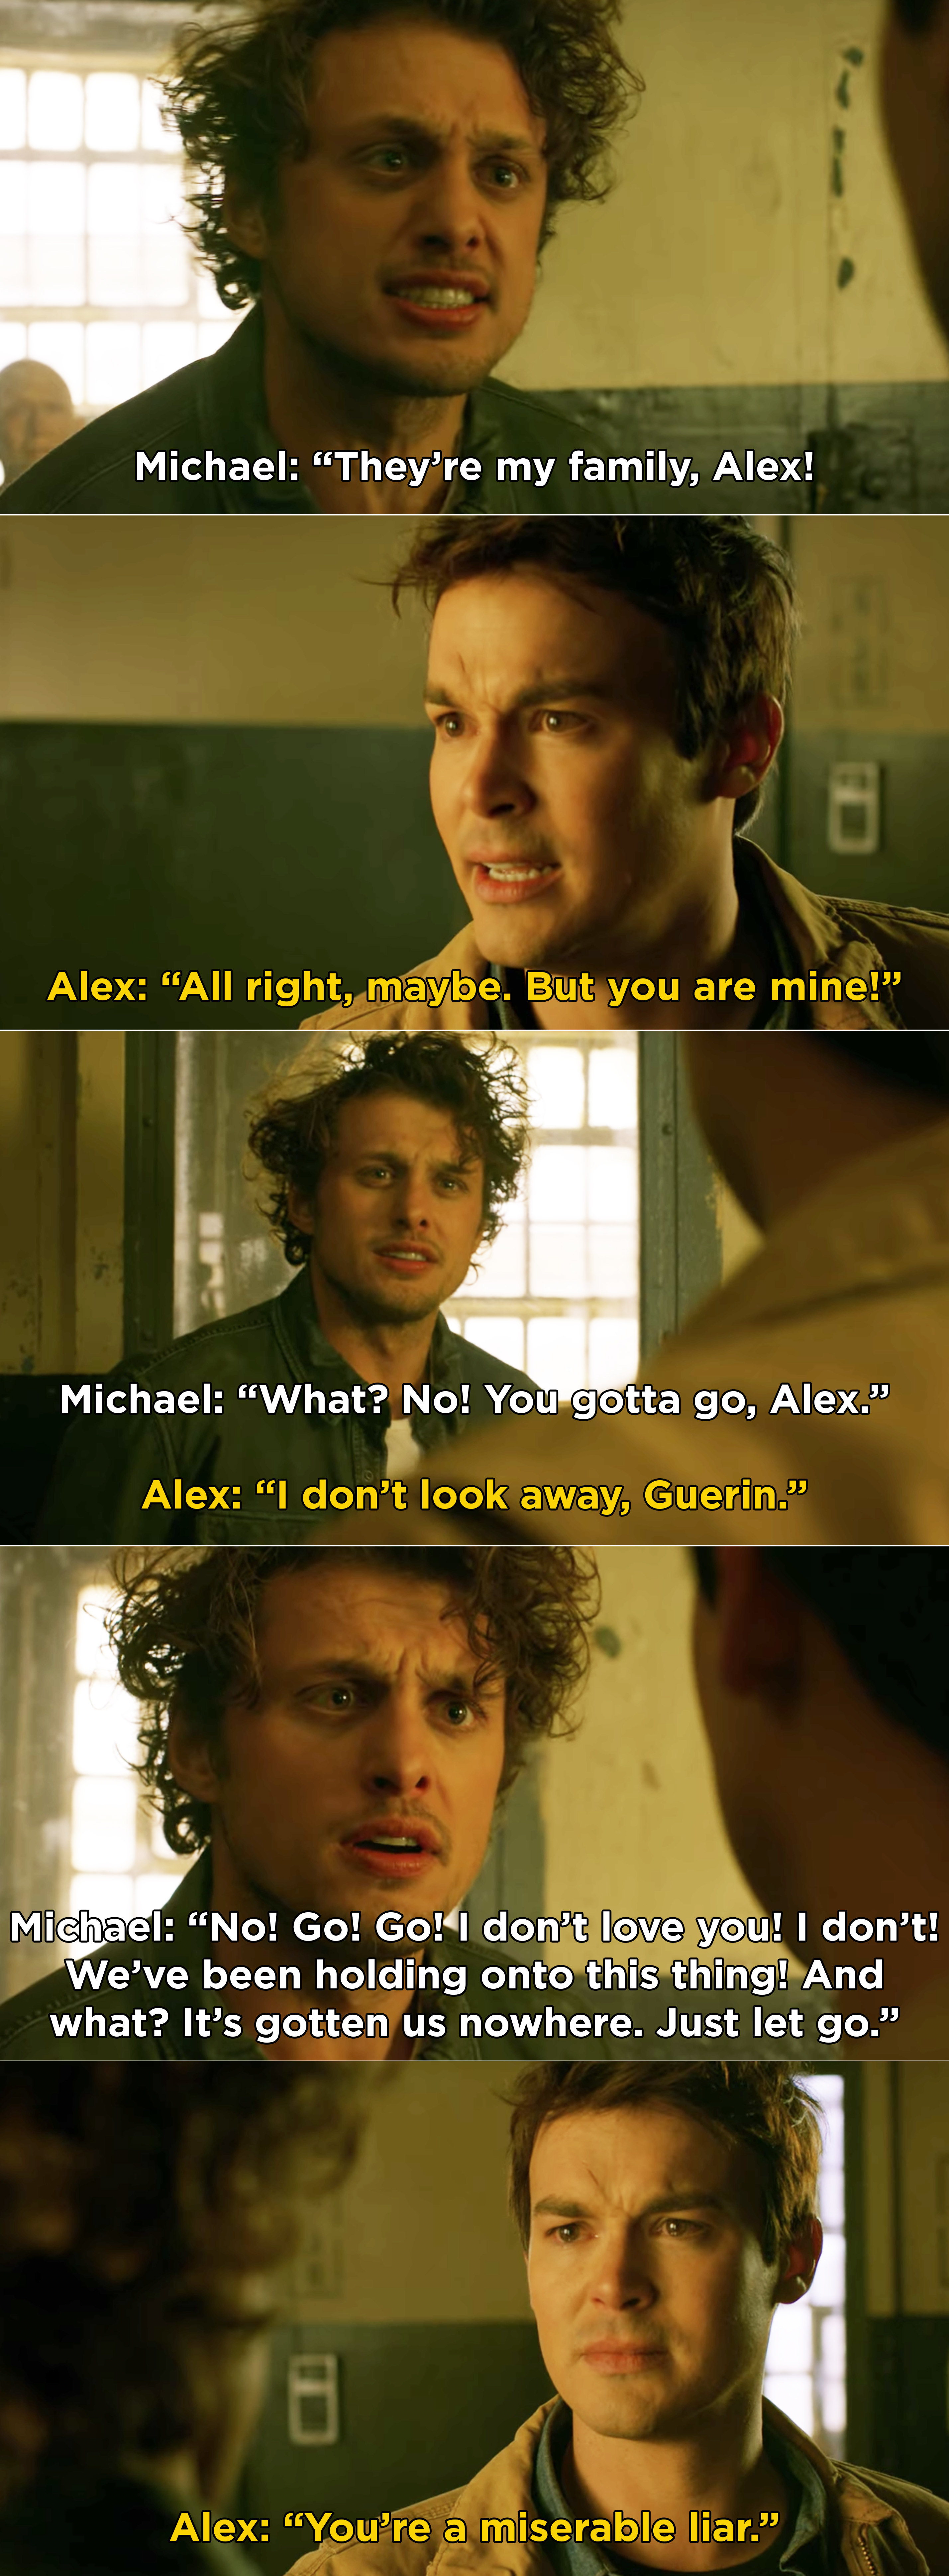 Michael告诉亚历克斯他并# x27; t爱他了,和亚历克斯知道他# x27;年代撒谎